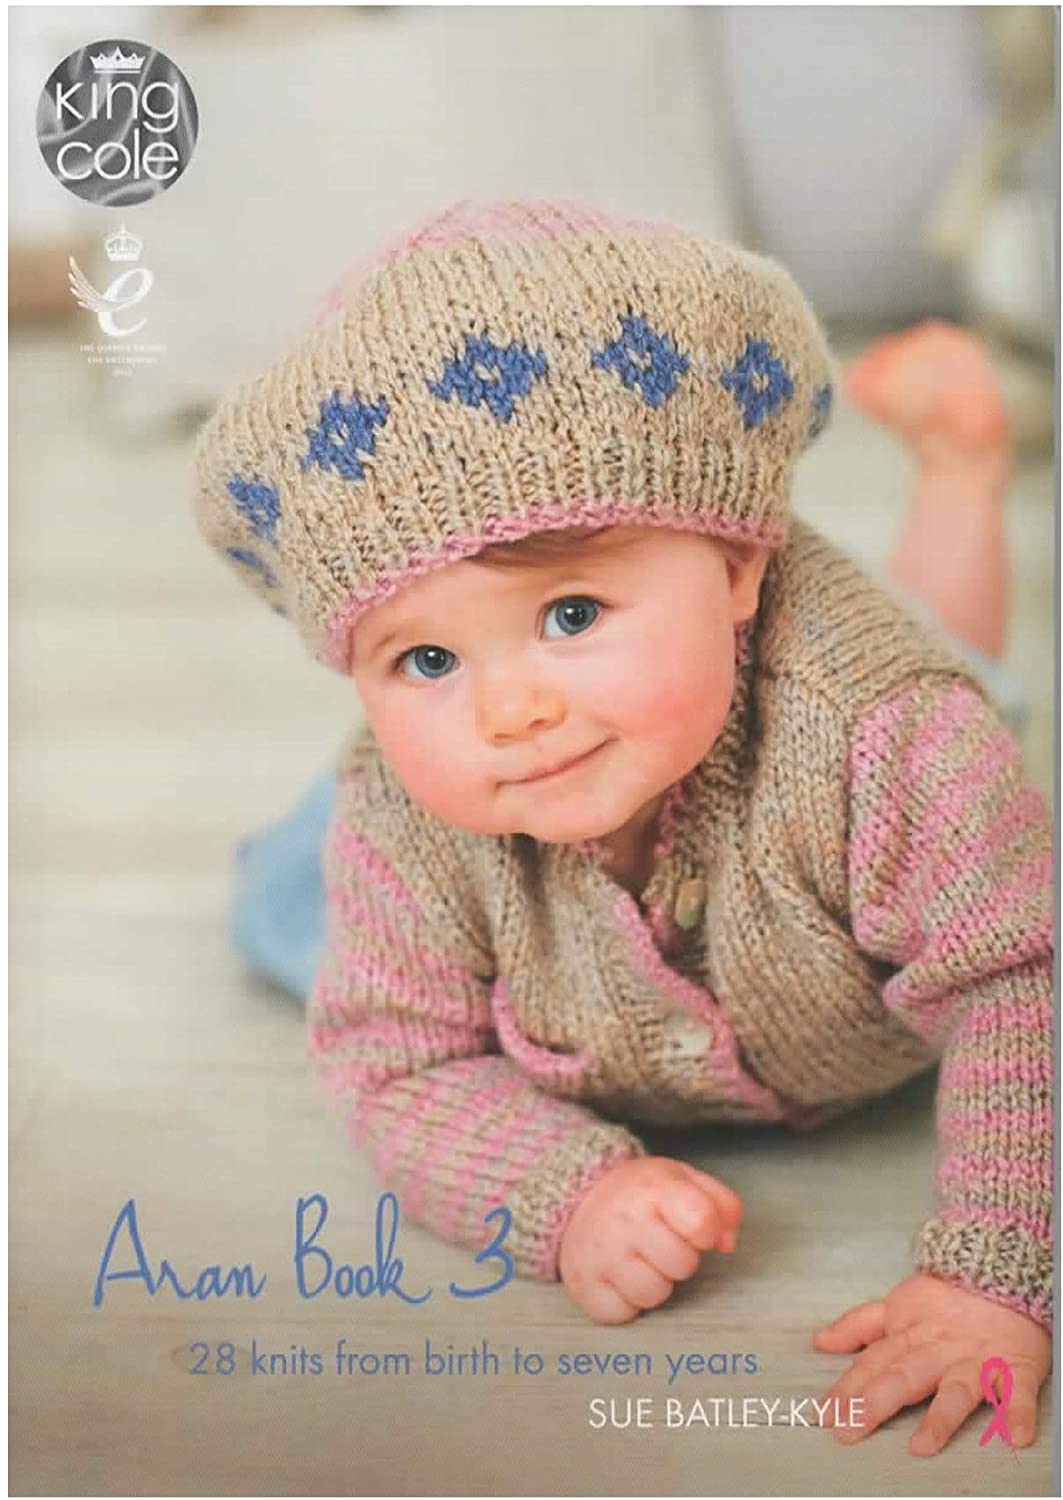 King Cole Baby Knitting Aran Book 3